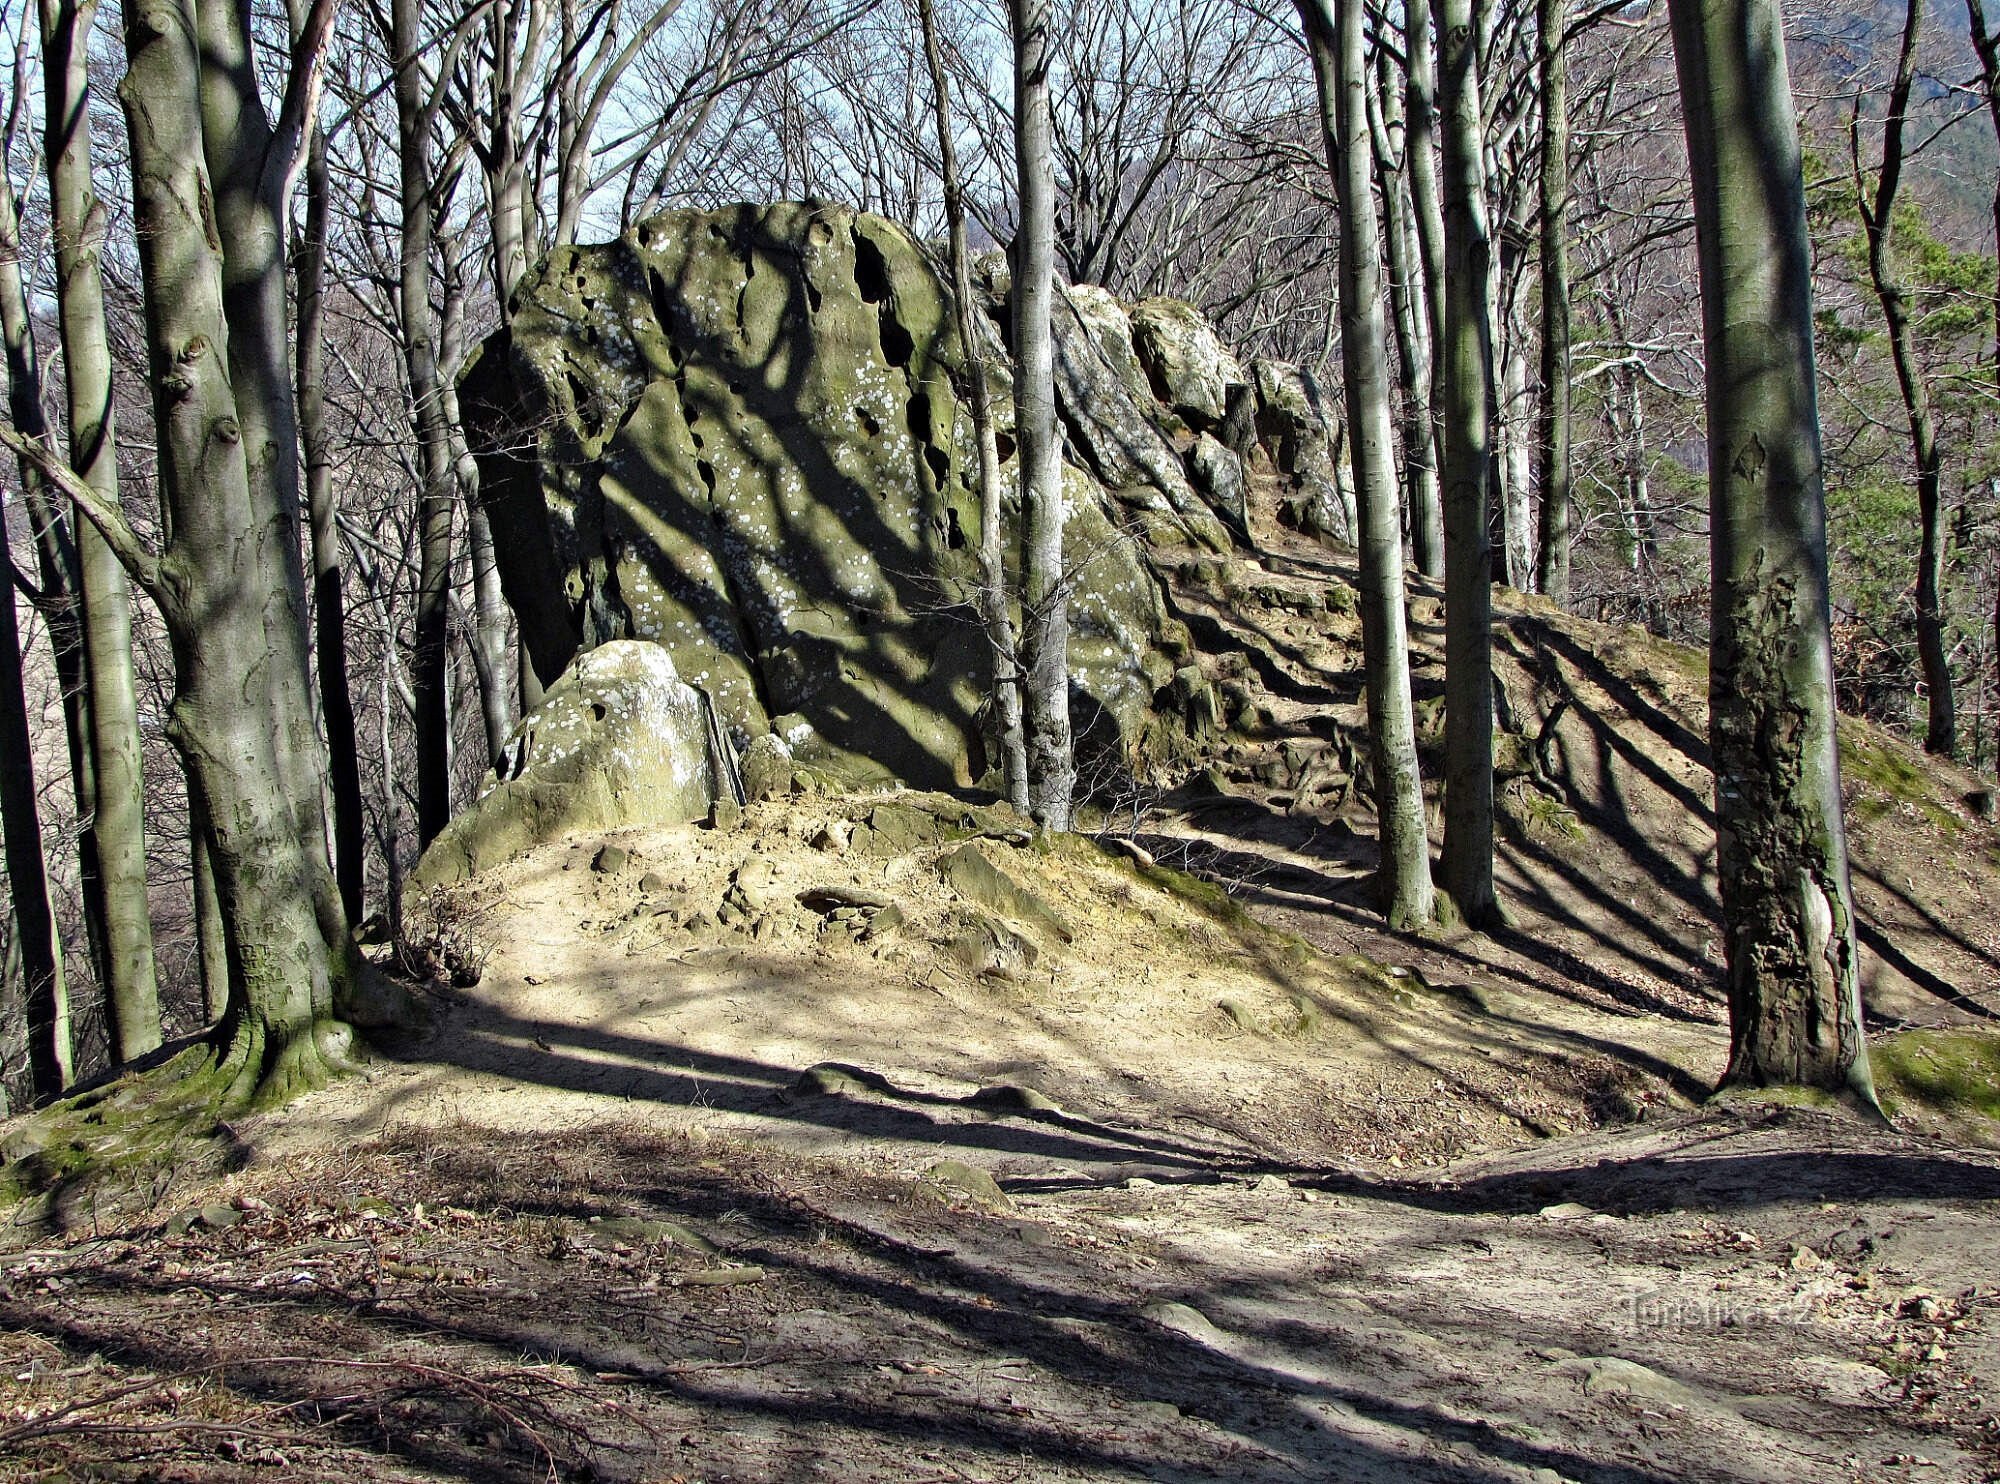 the Čertův kámen rock formation and the grounds of the former castle